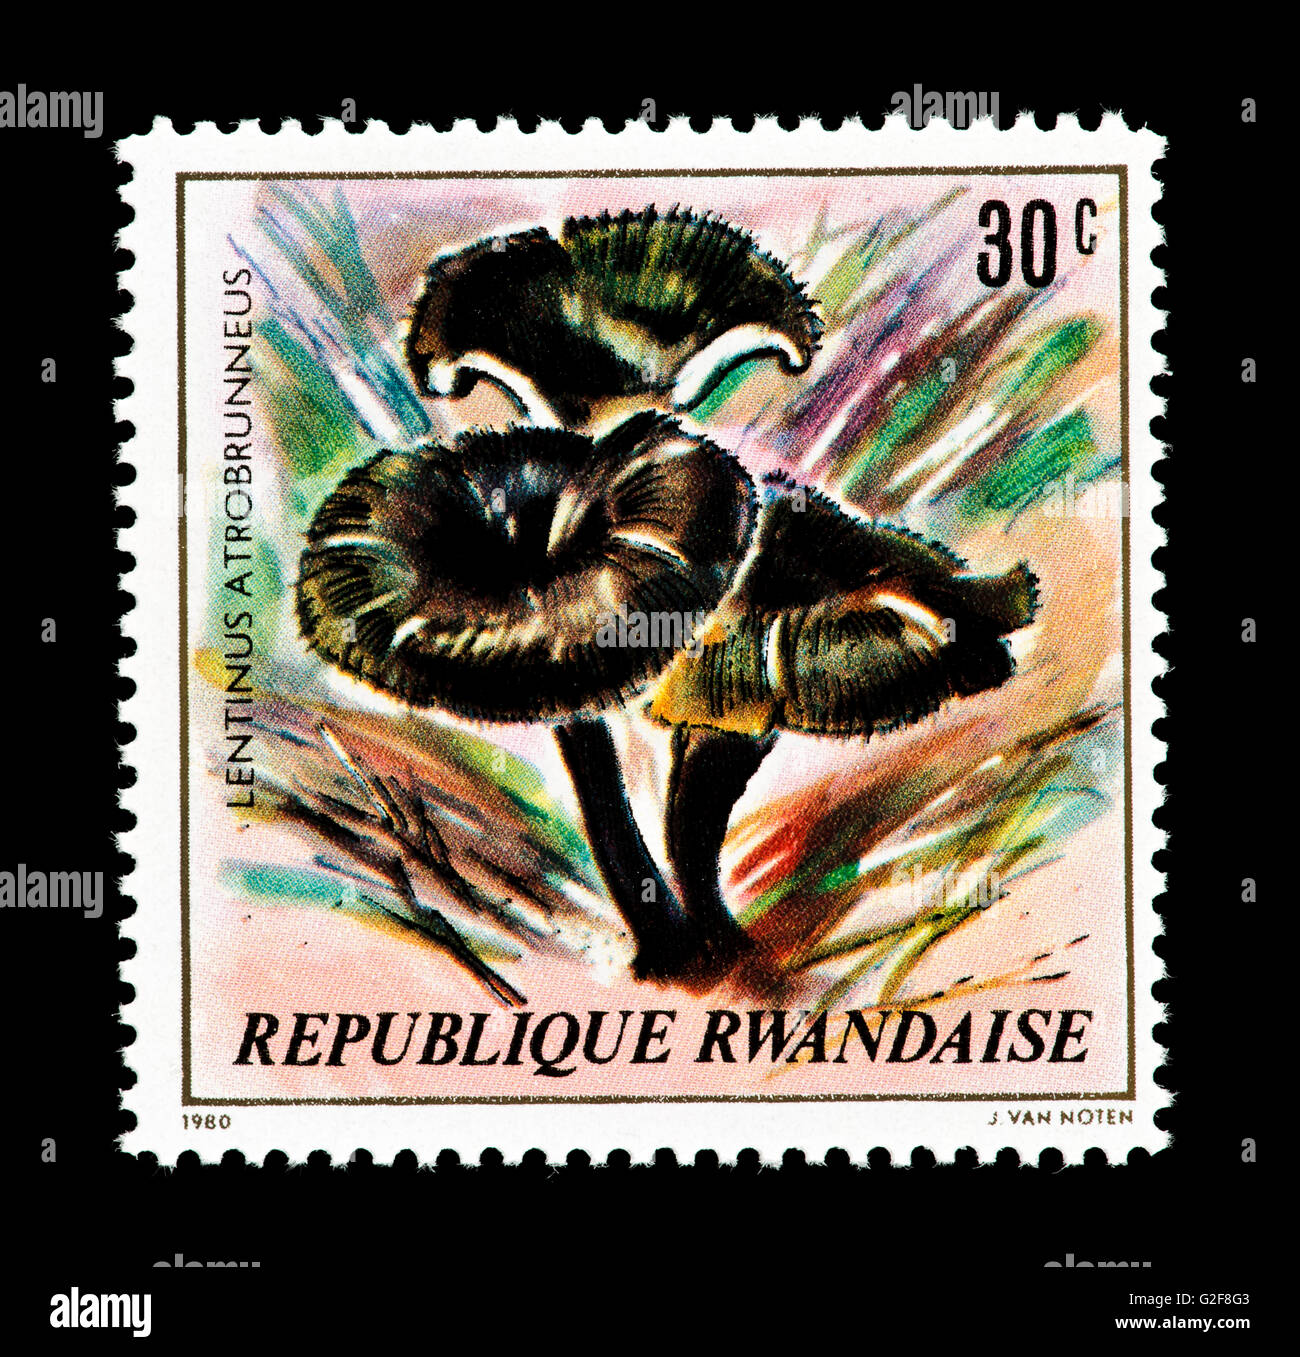 Postage stamp from Rwanda depicting a mushroom Lentinus atrobrunneus Stock Photo